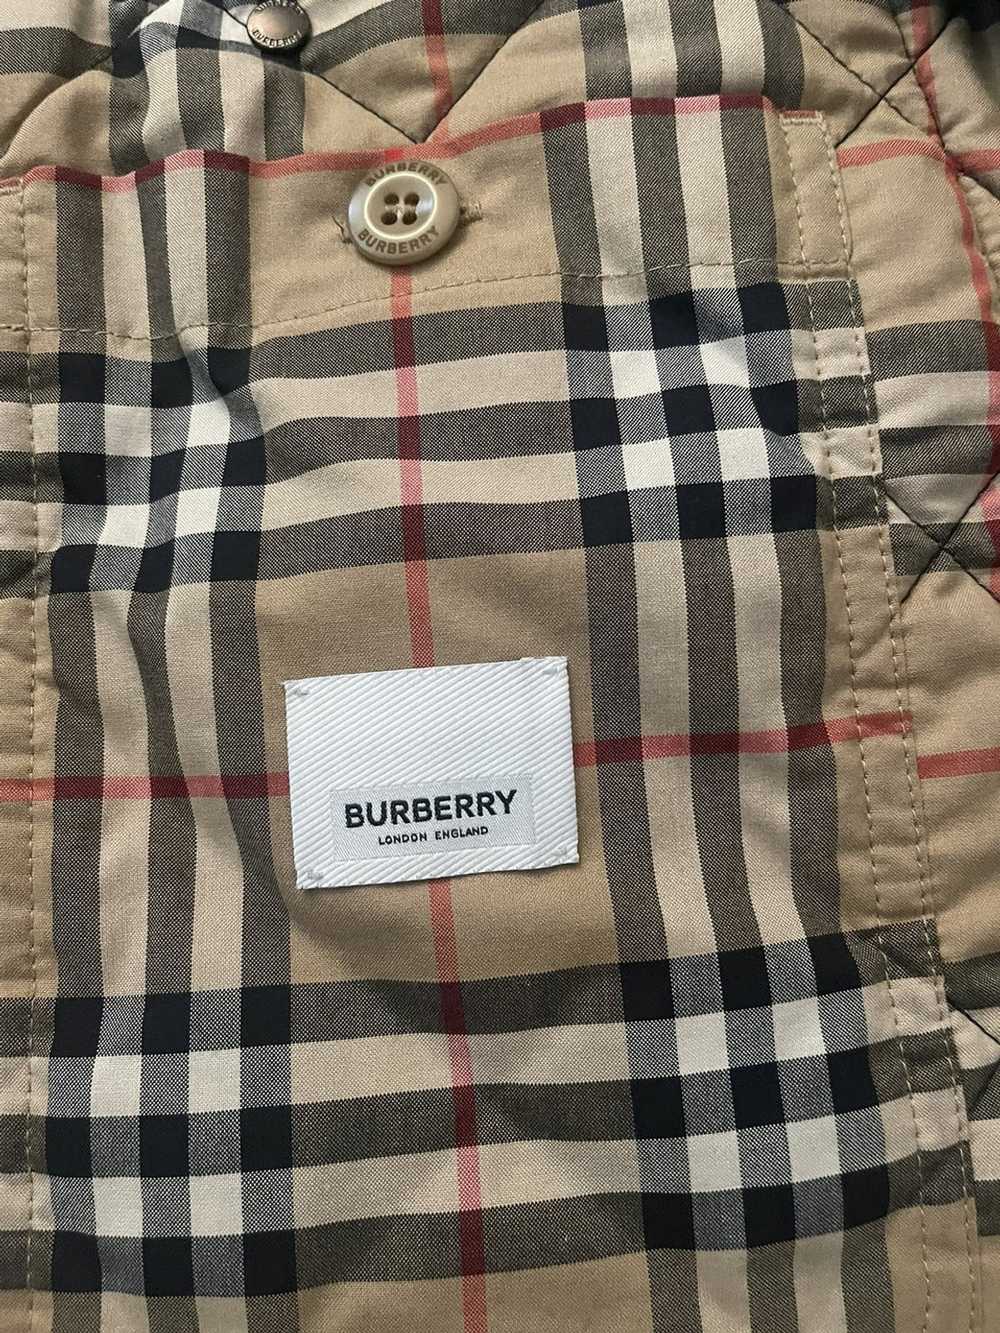 Burberry Burberry - image 6